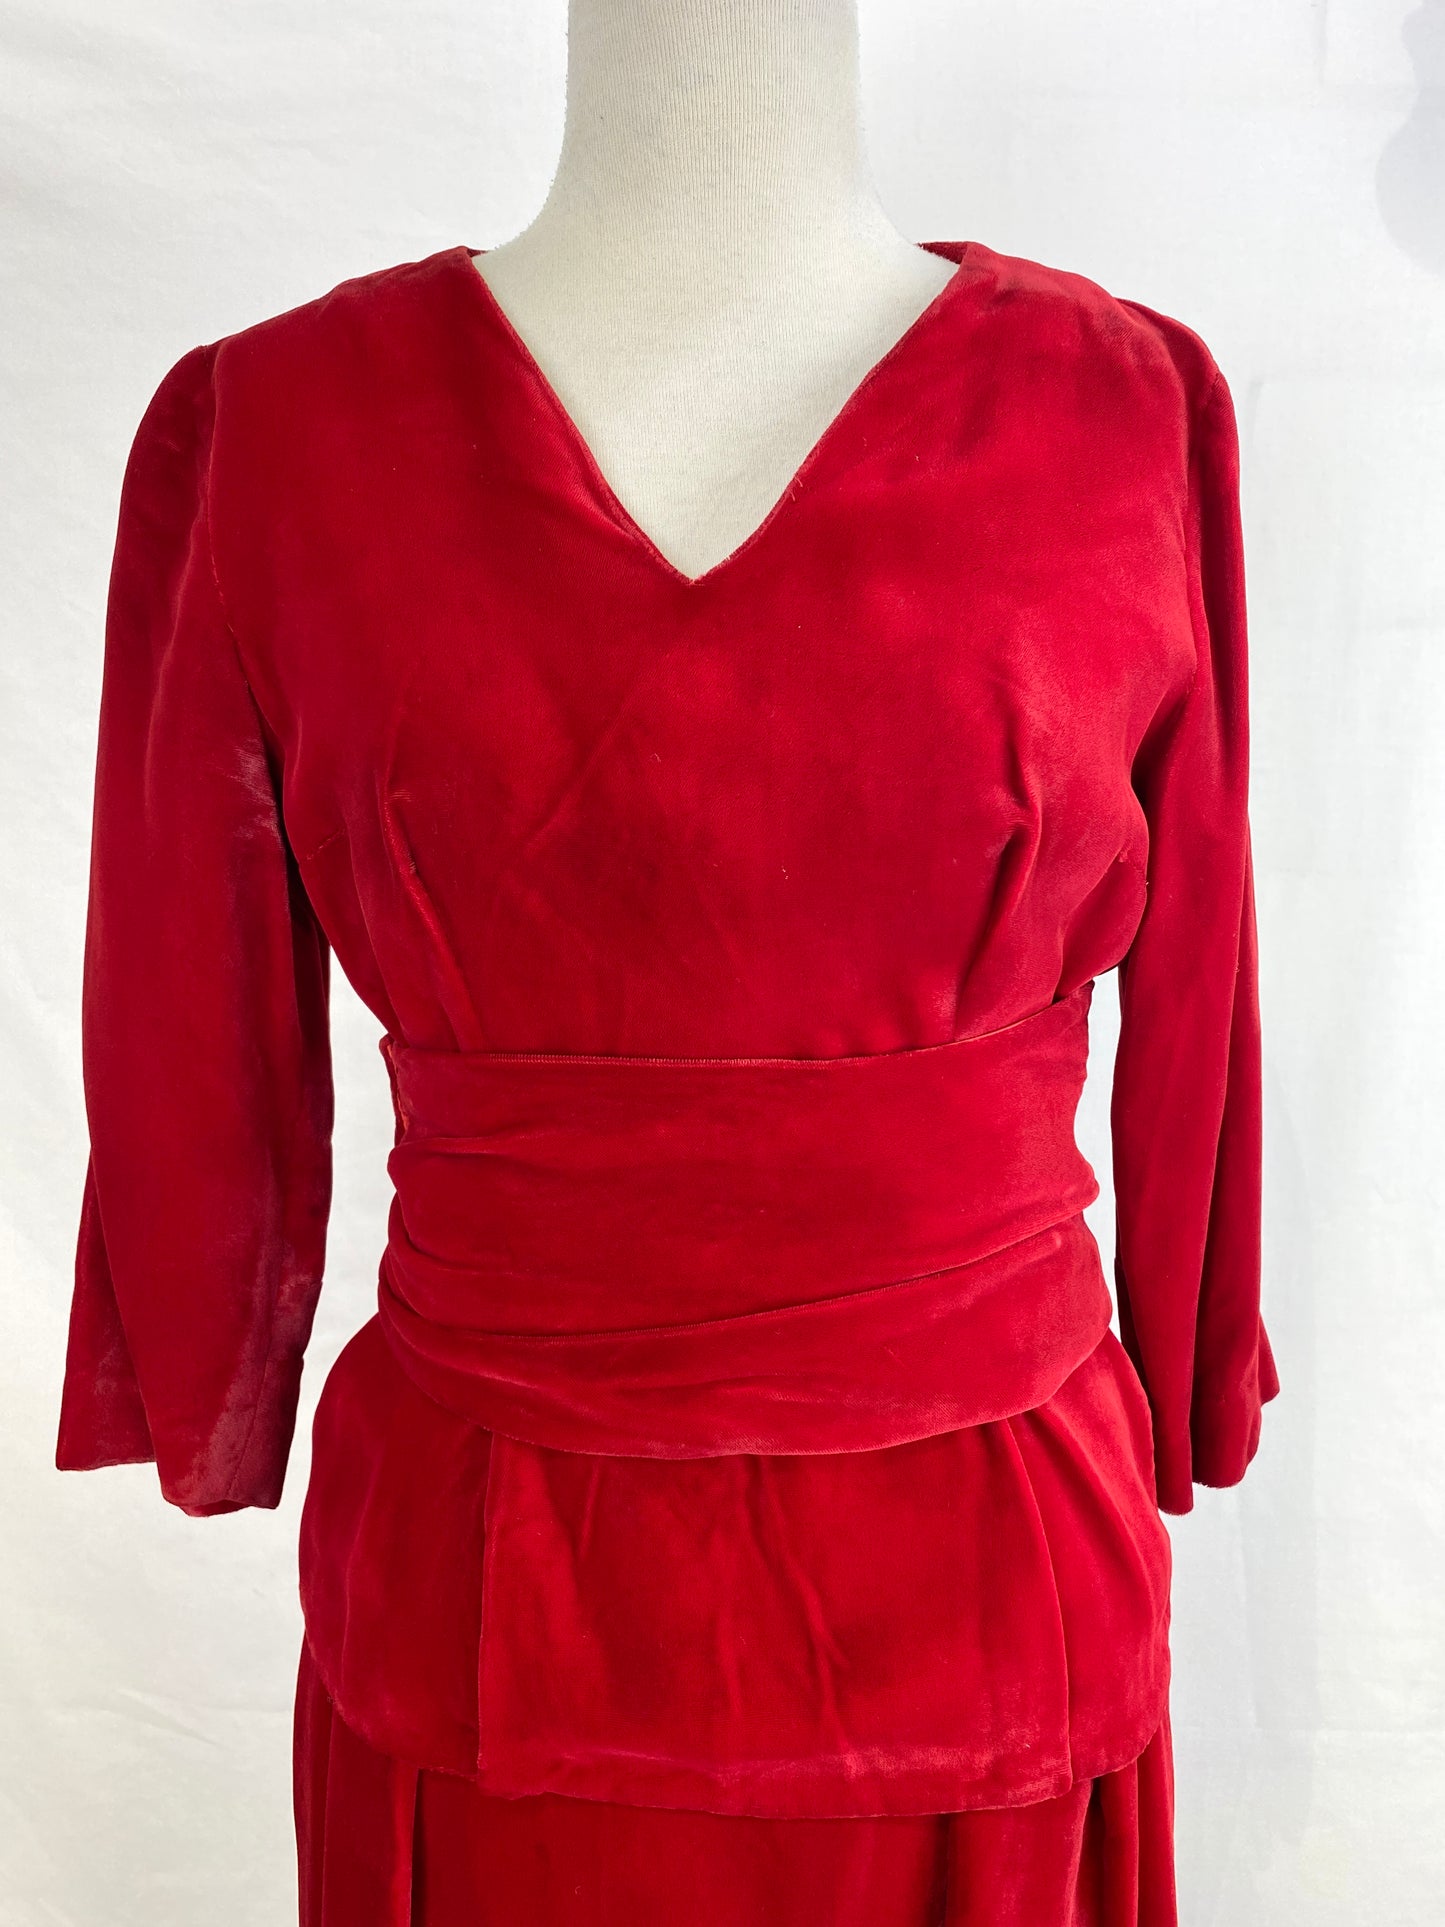 Vintage 1950s Red Velvet Skirt & Top 2 Piece Set With Sash Belt, Small